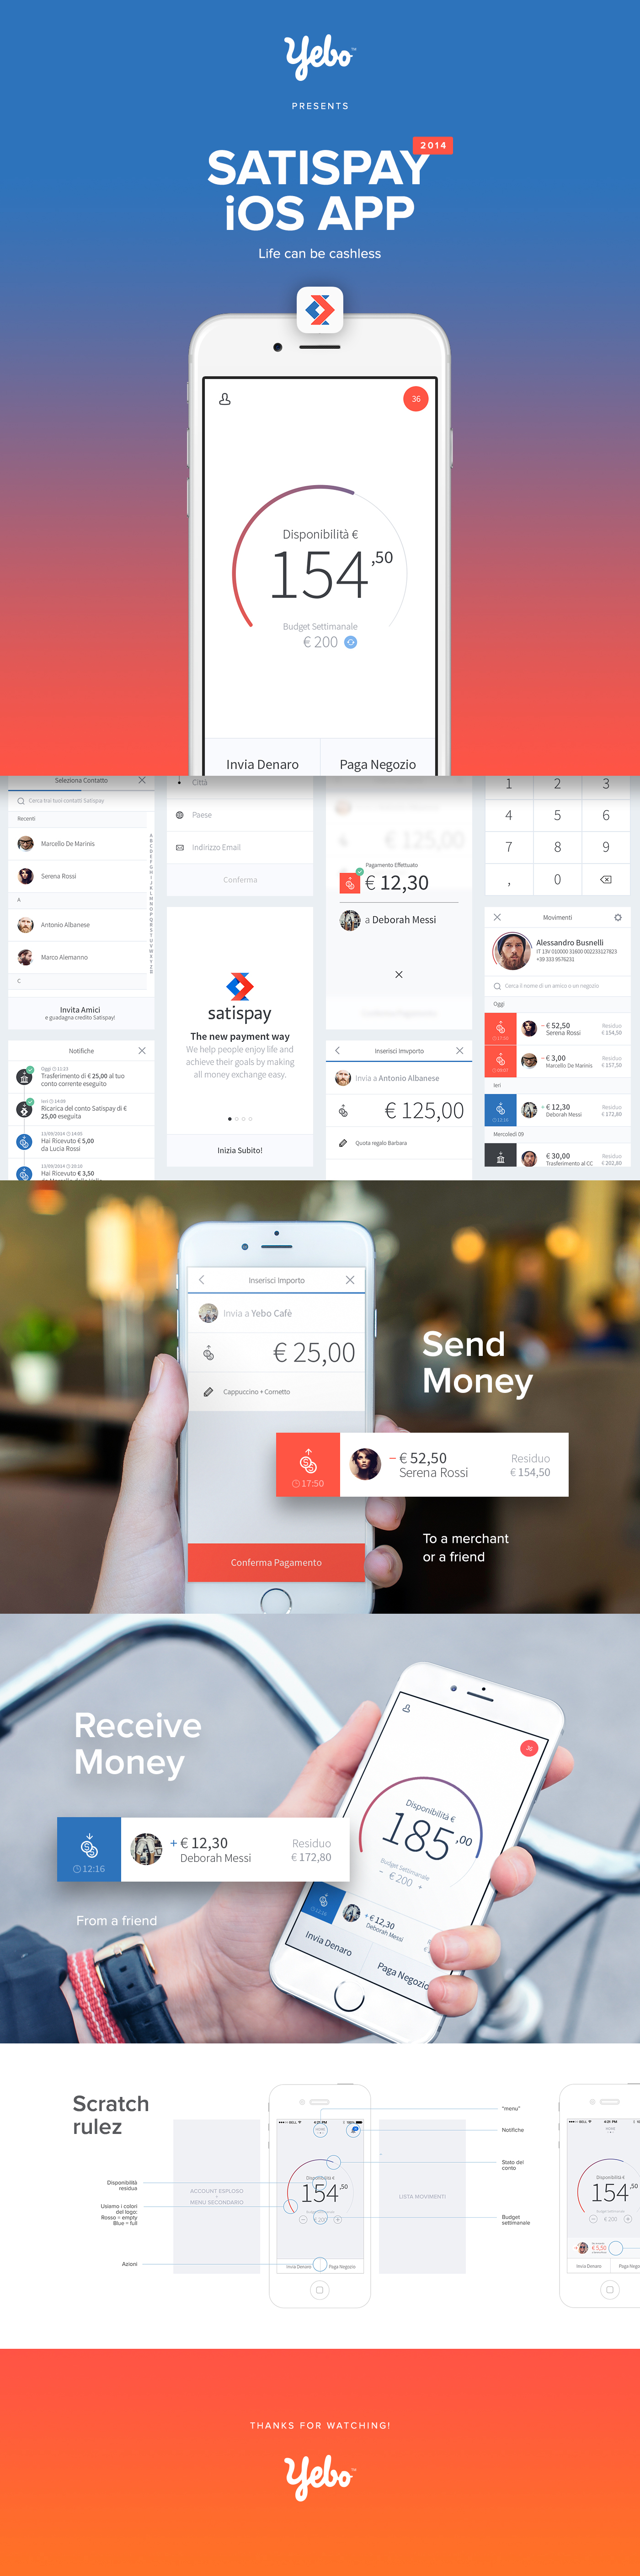 ios app mobile banking iPhone6 iphone money money transfer app design